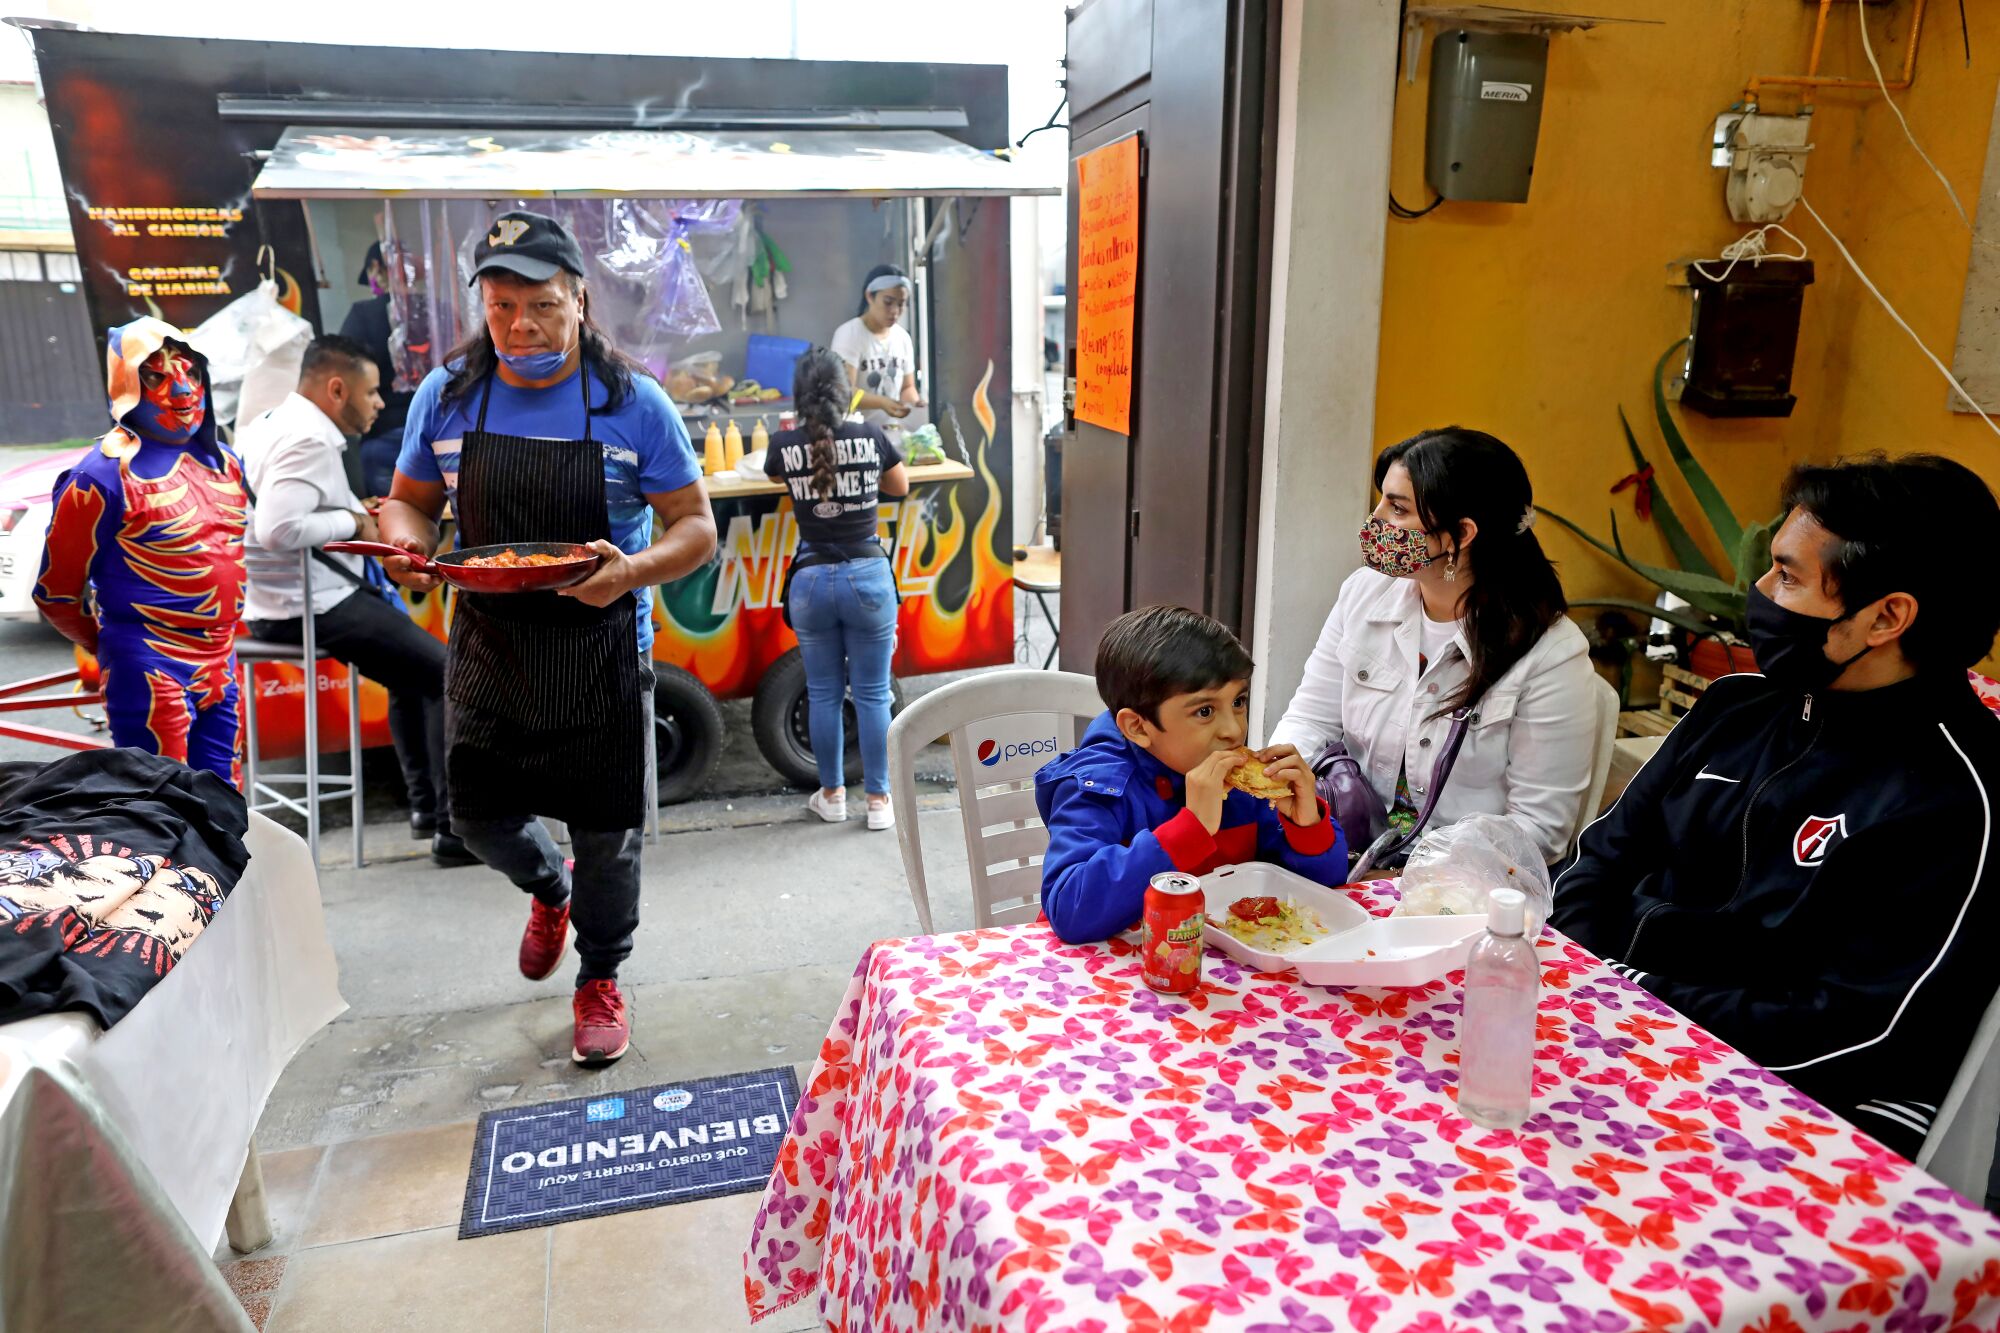 Wrestler José Gutiérrez Hernández, 48, center, serves food truck customers in Mexico City's El Risco CTM neighborhood.